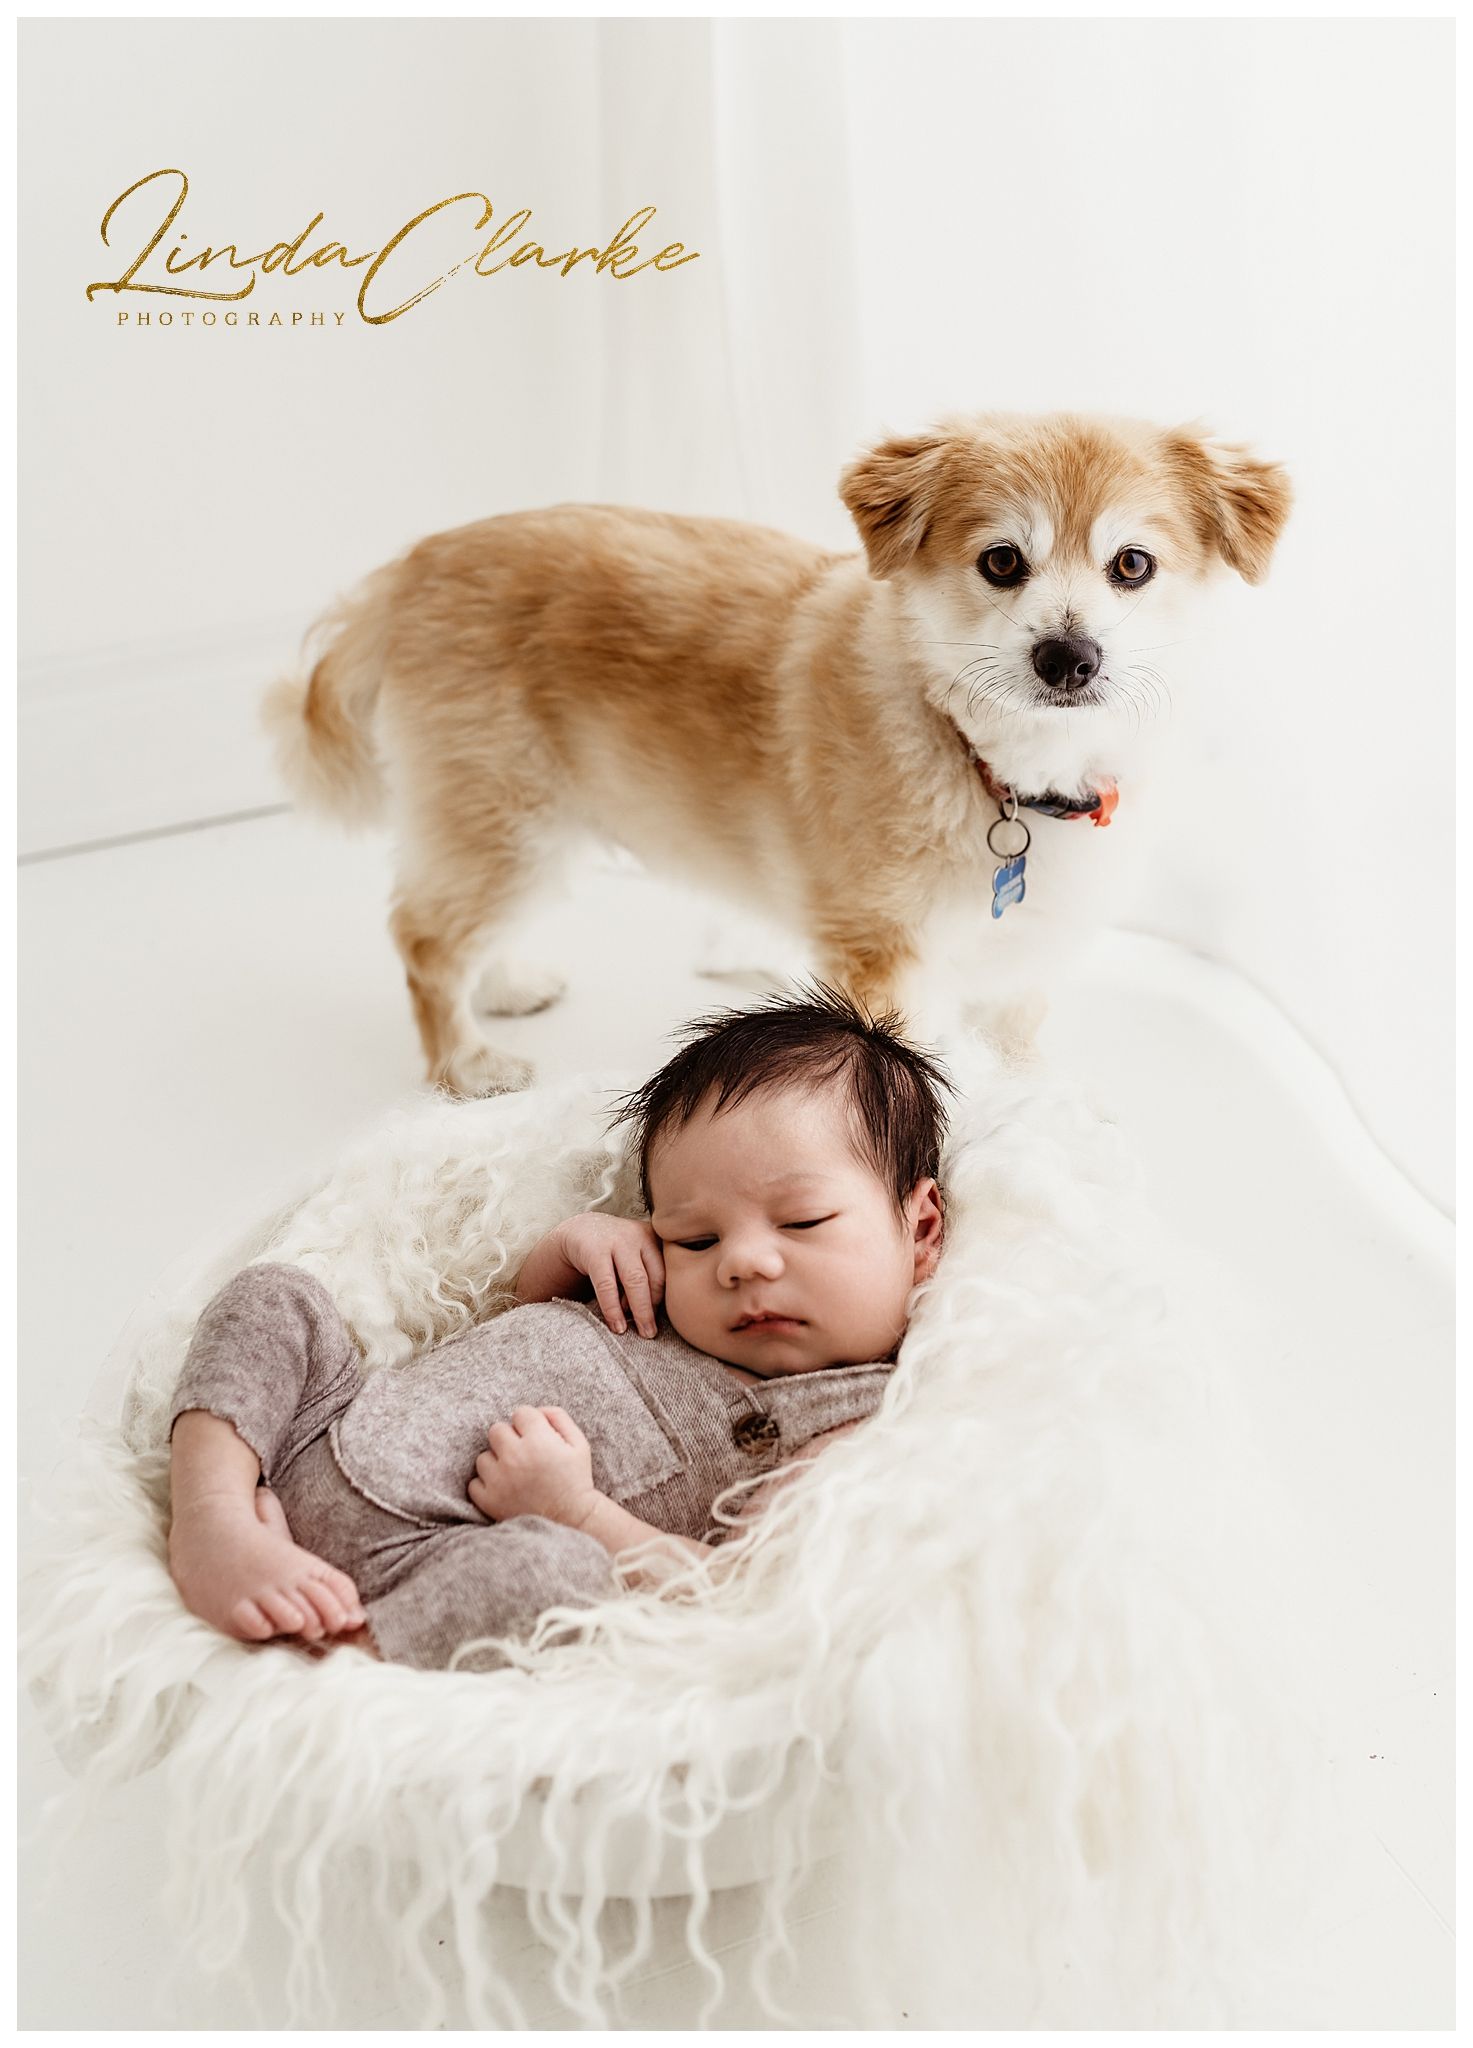 Newborn baby with dog during a newborn photoshoot in dublin Ireland